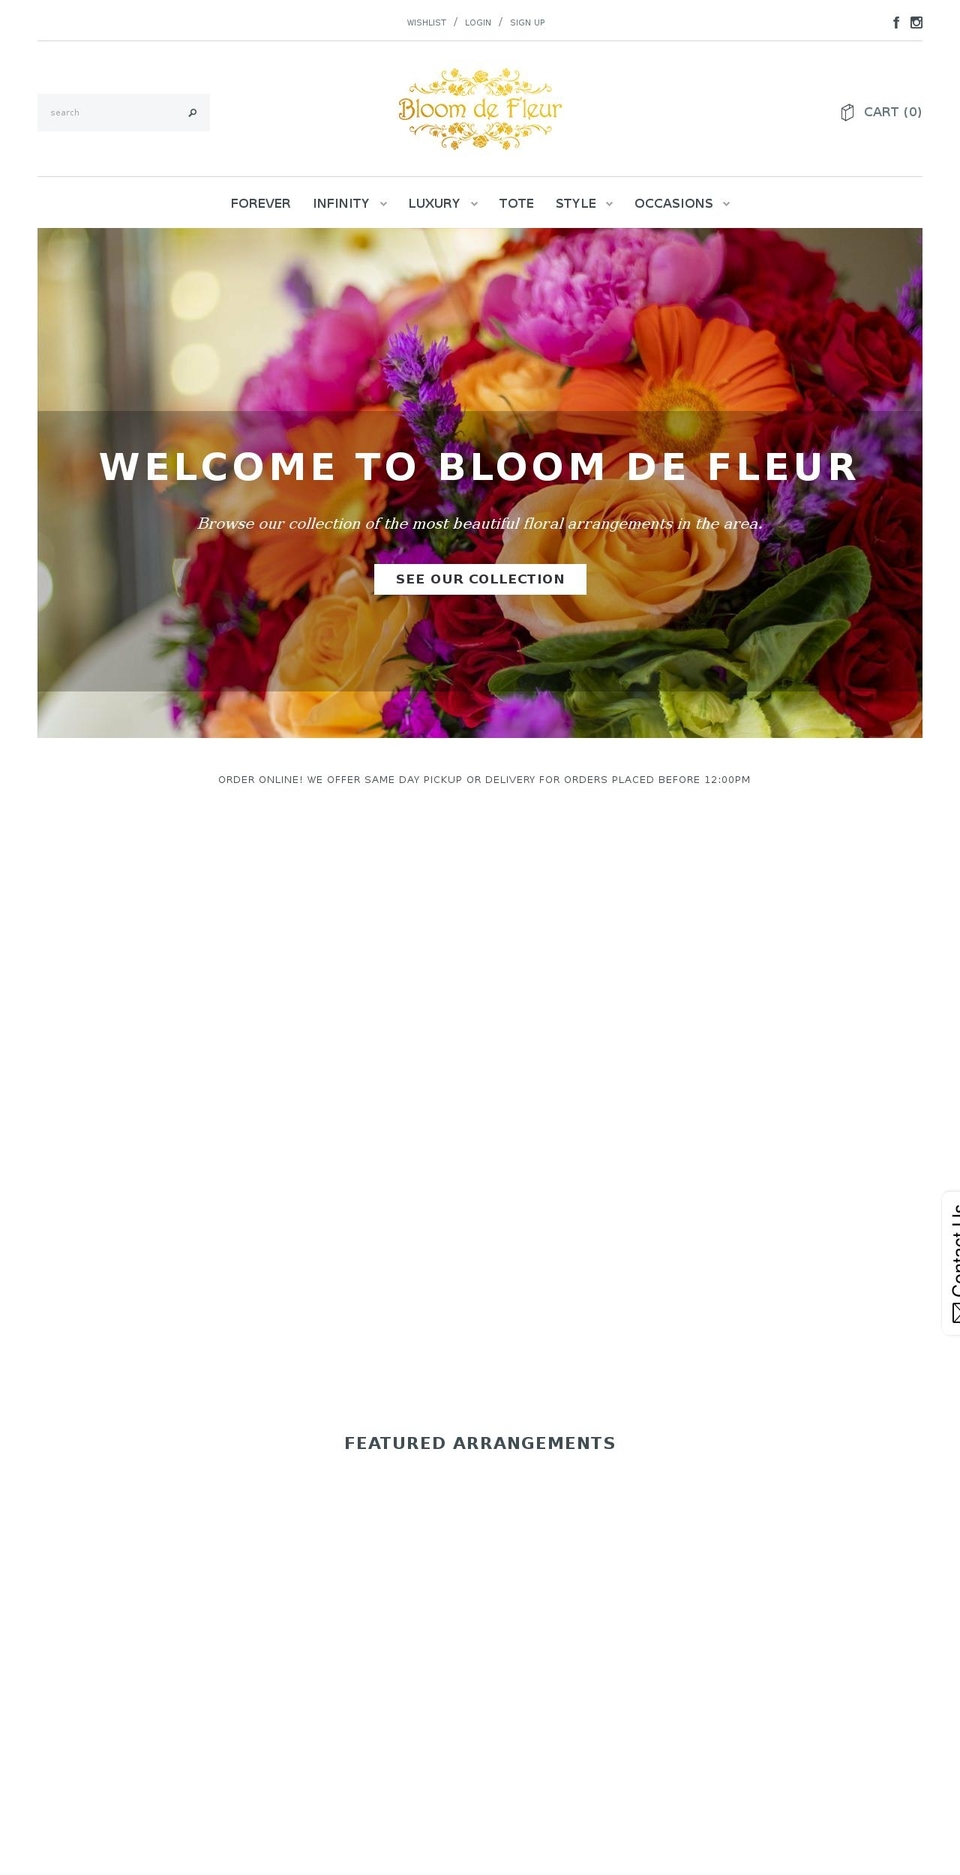 bloomdf.com shopify website screenshot